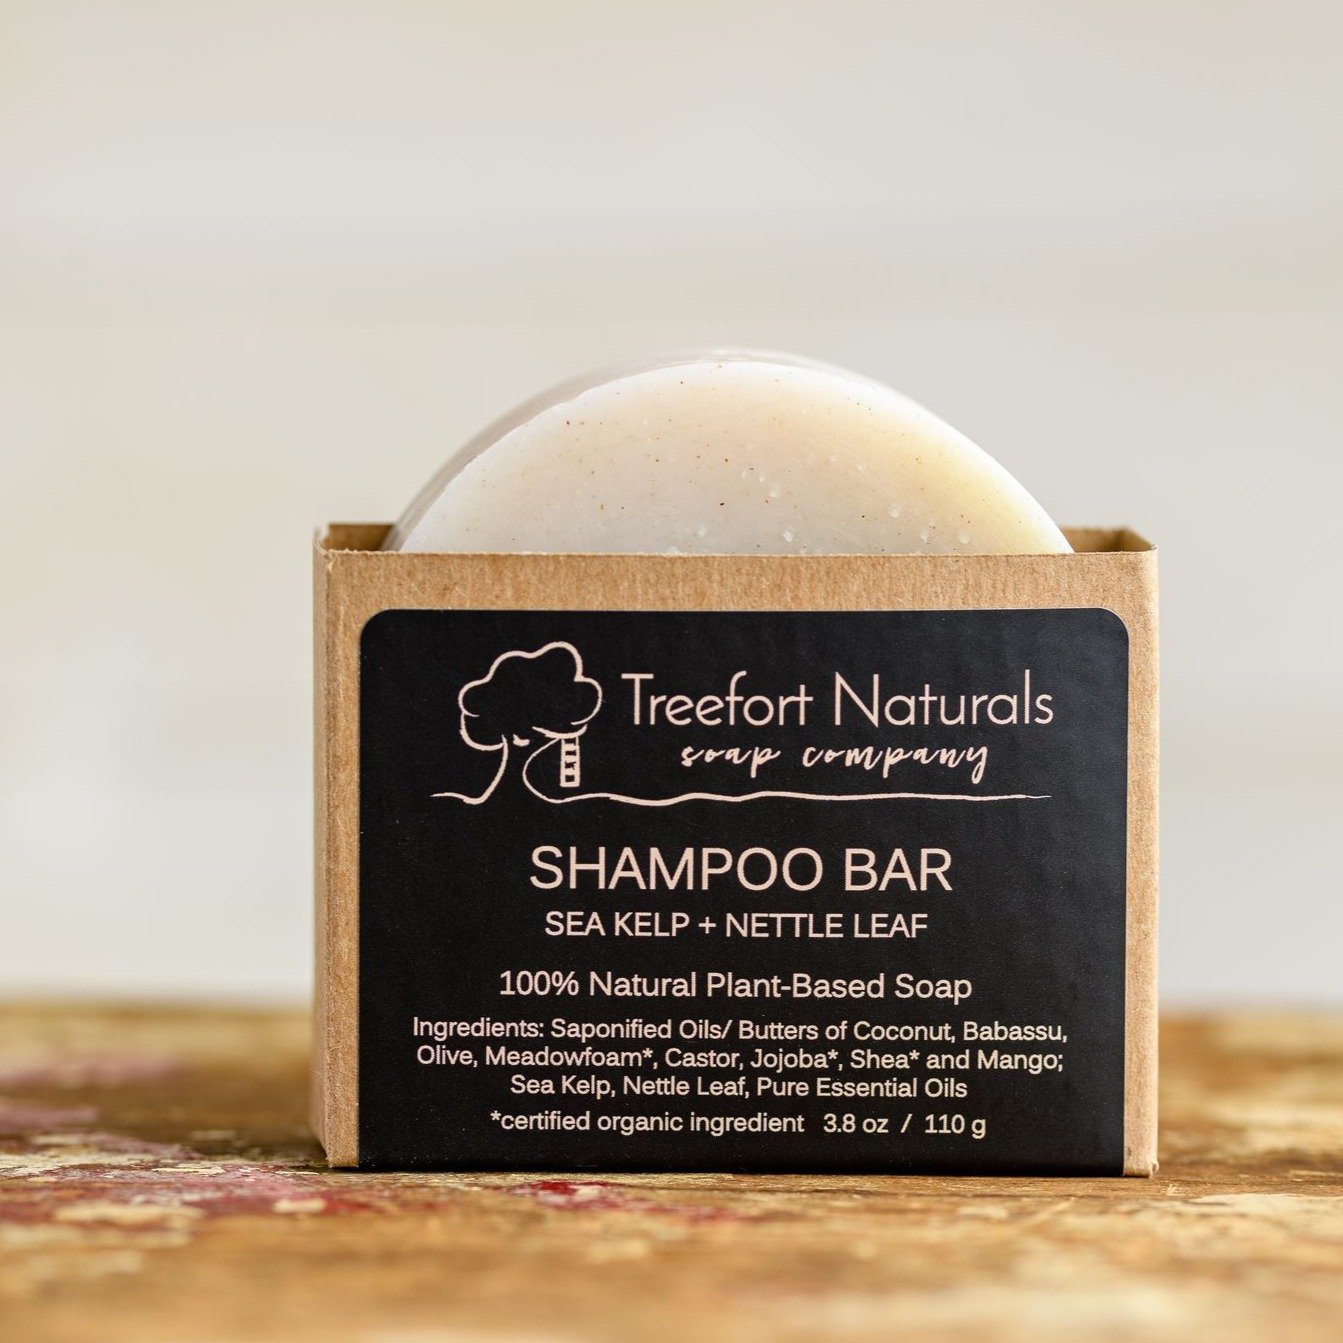 Sea Kelp and Nettle Leaf Shampoo Bar